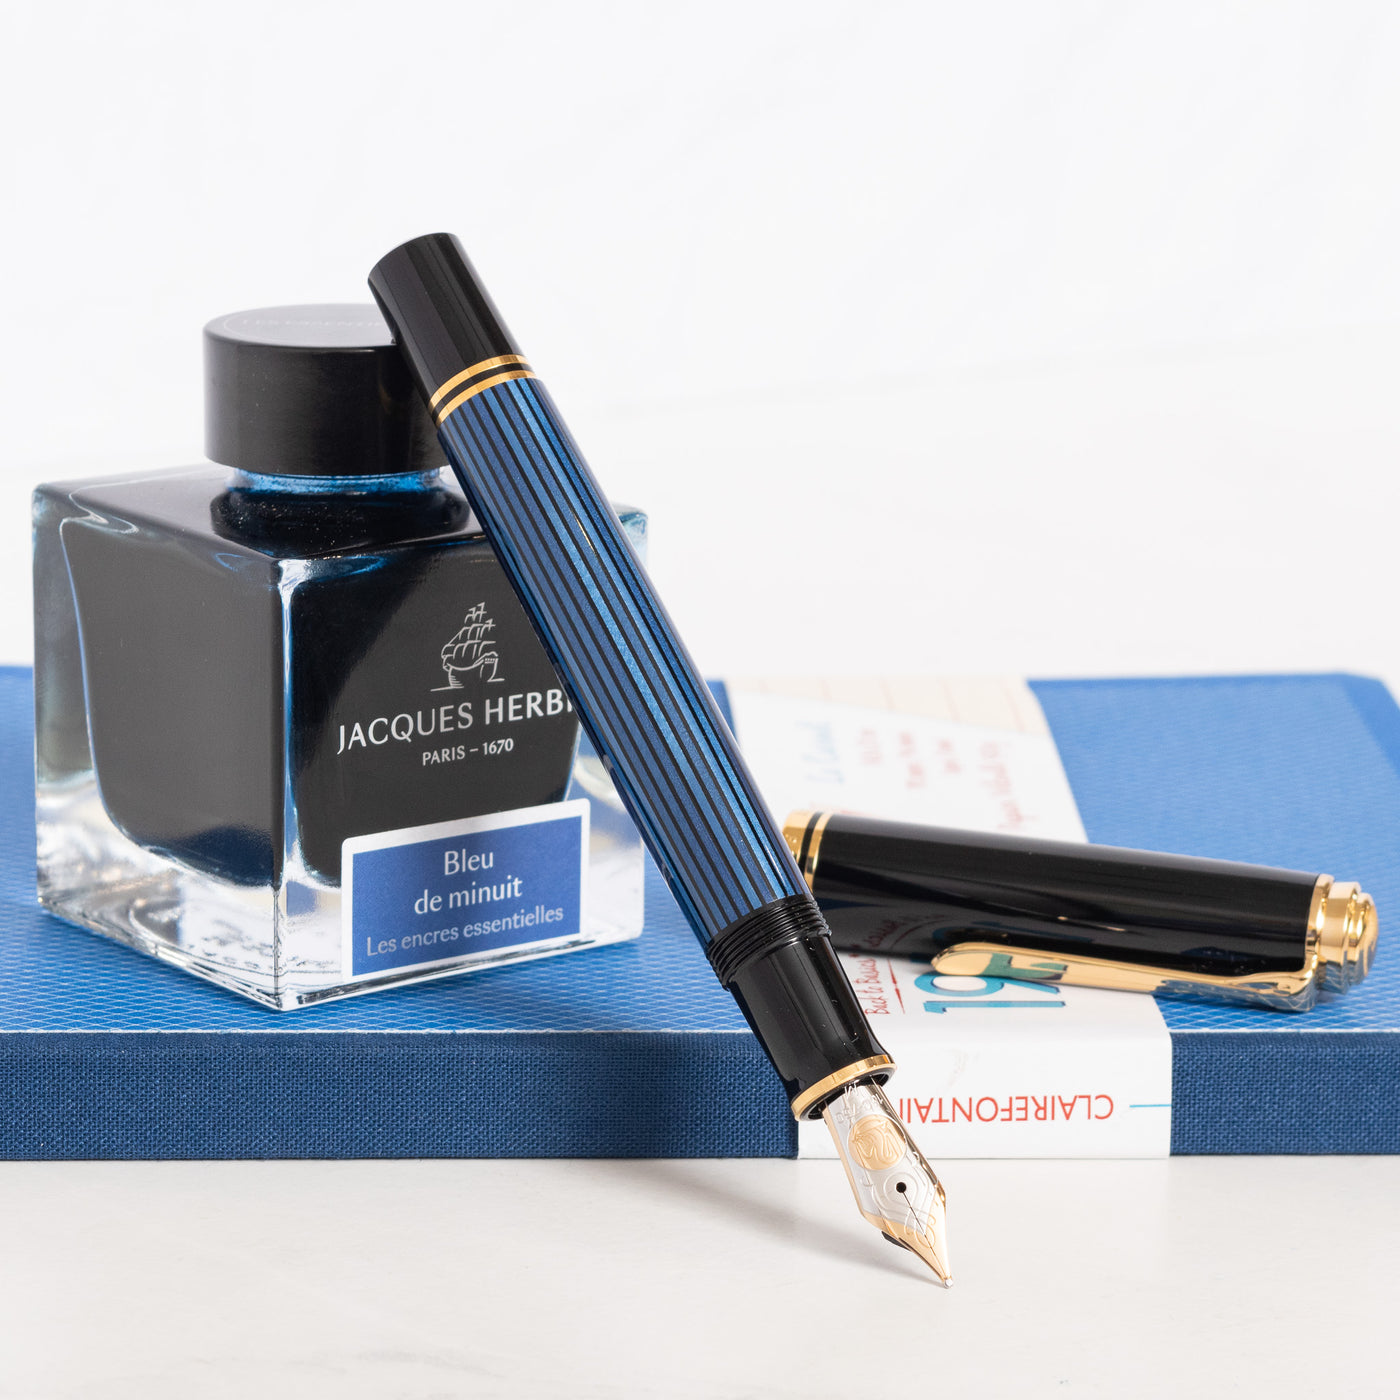 Pelikan Souveran M800 Black & Blue Fountain Pen